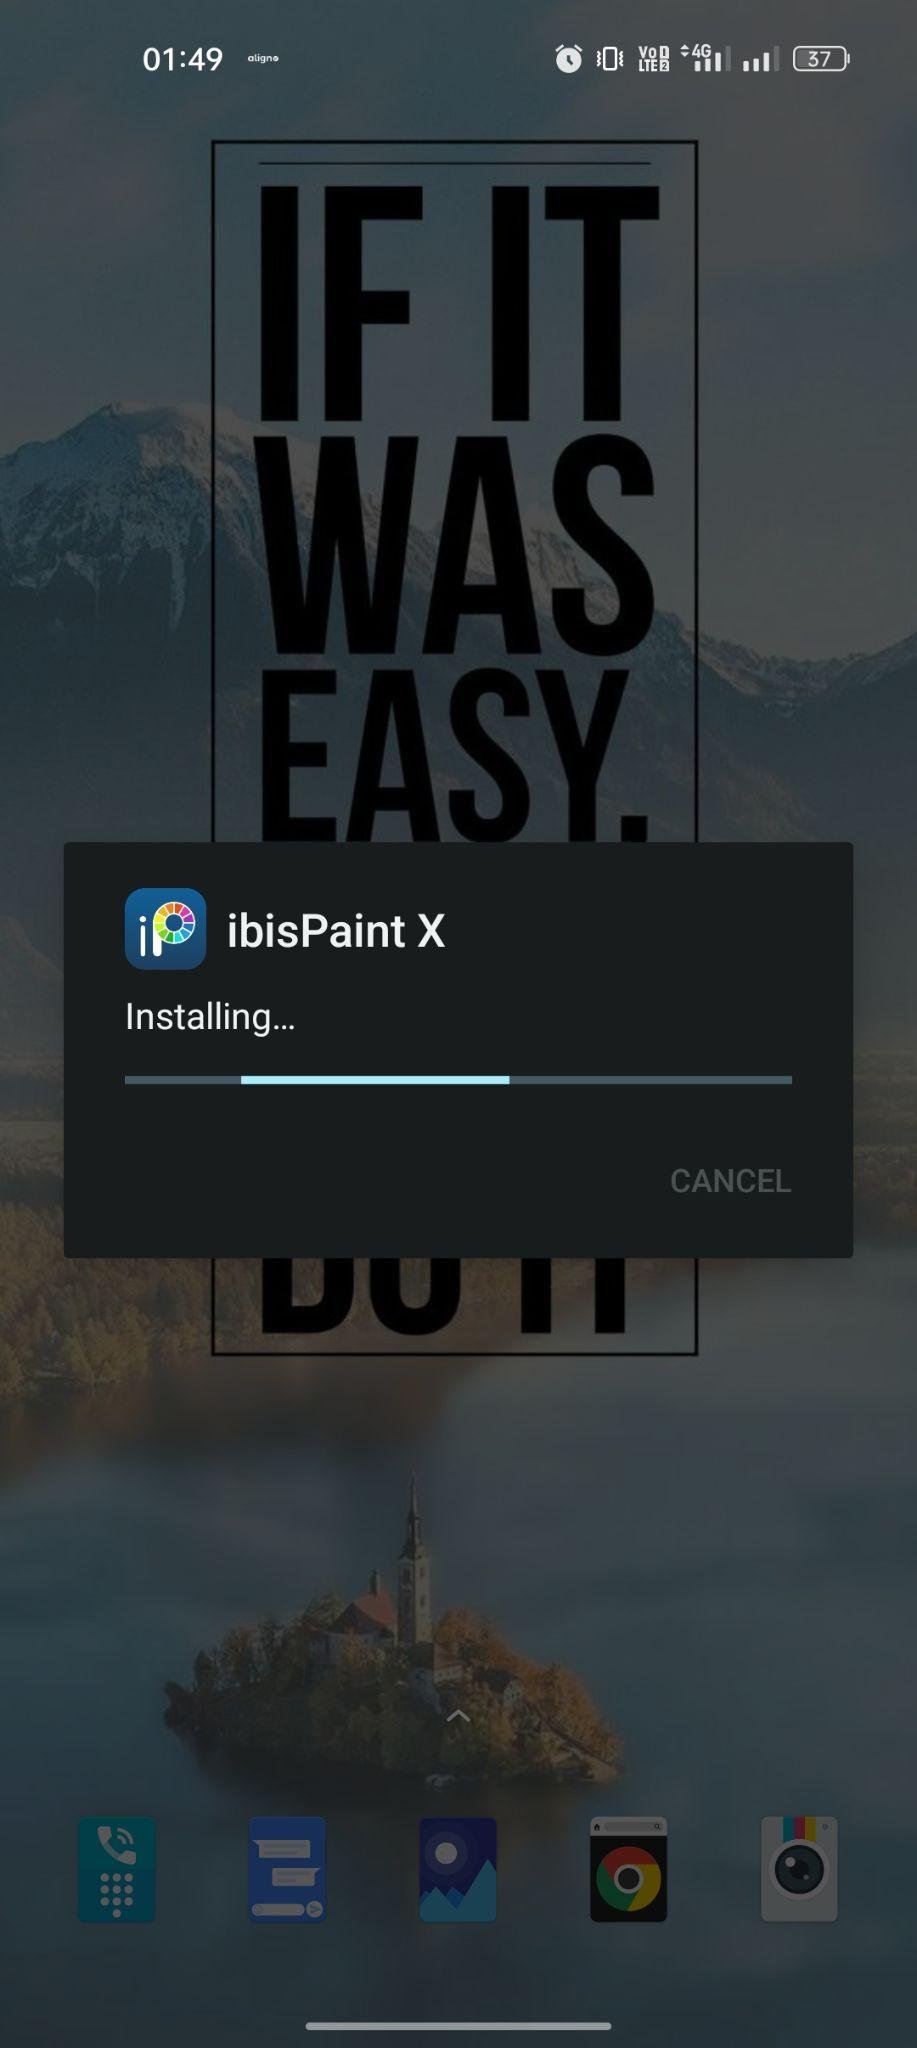 ibis Paint X apk installing